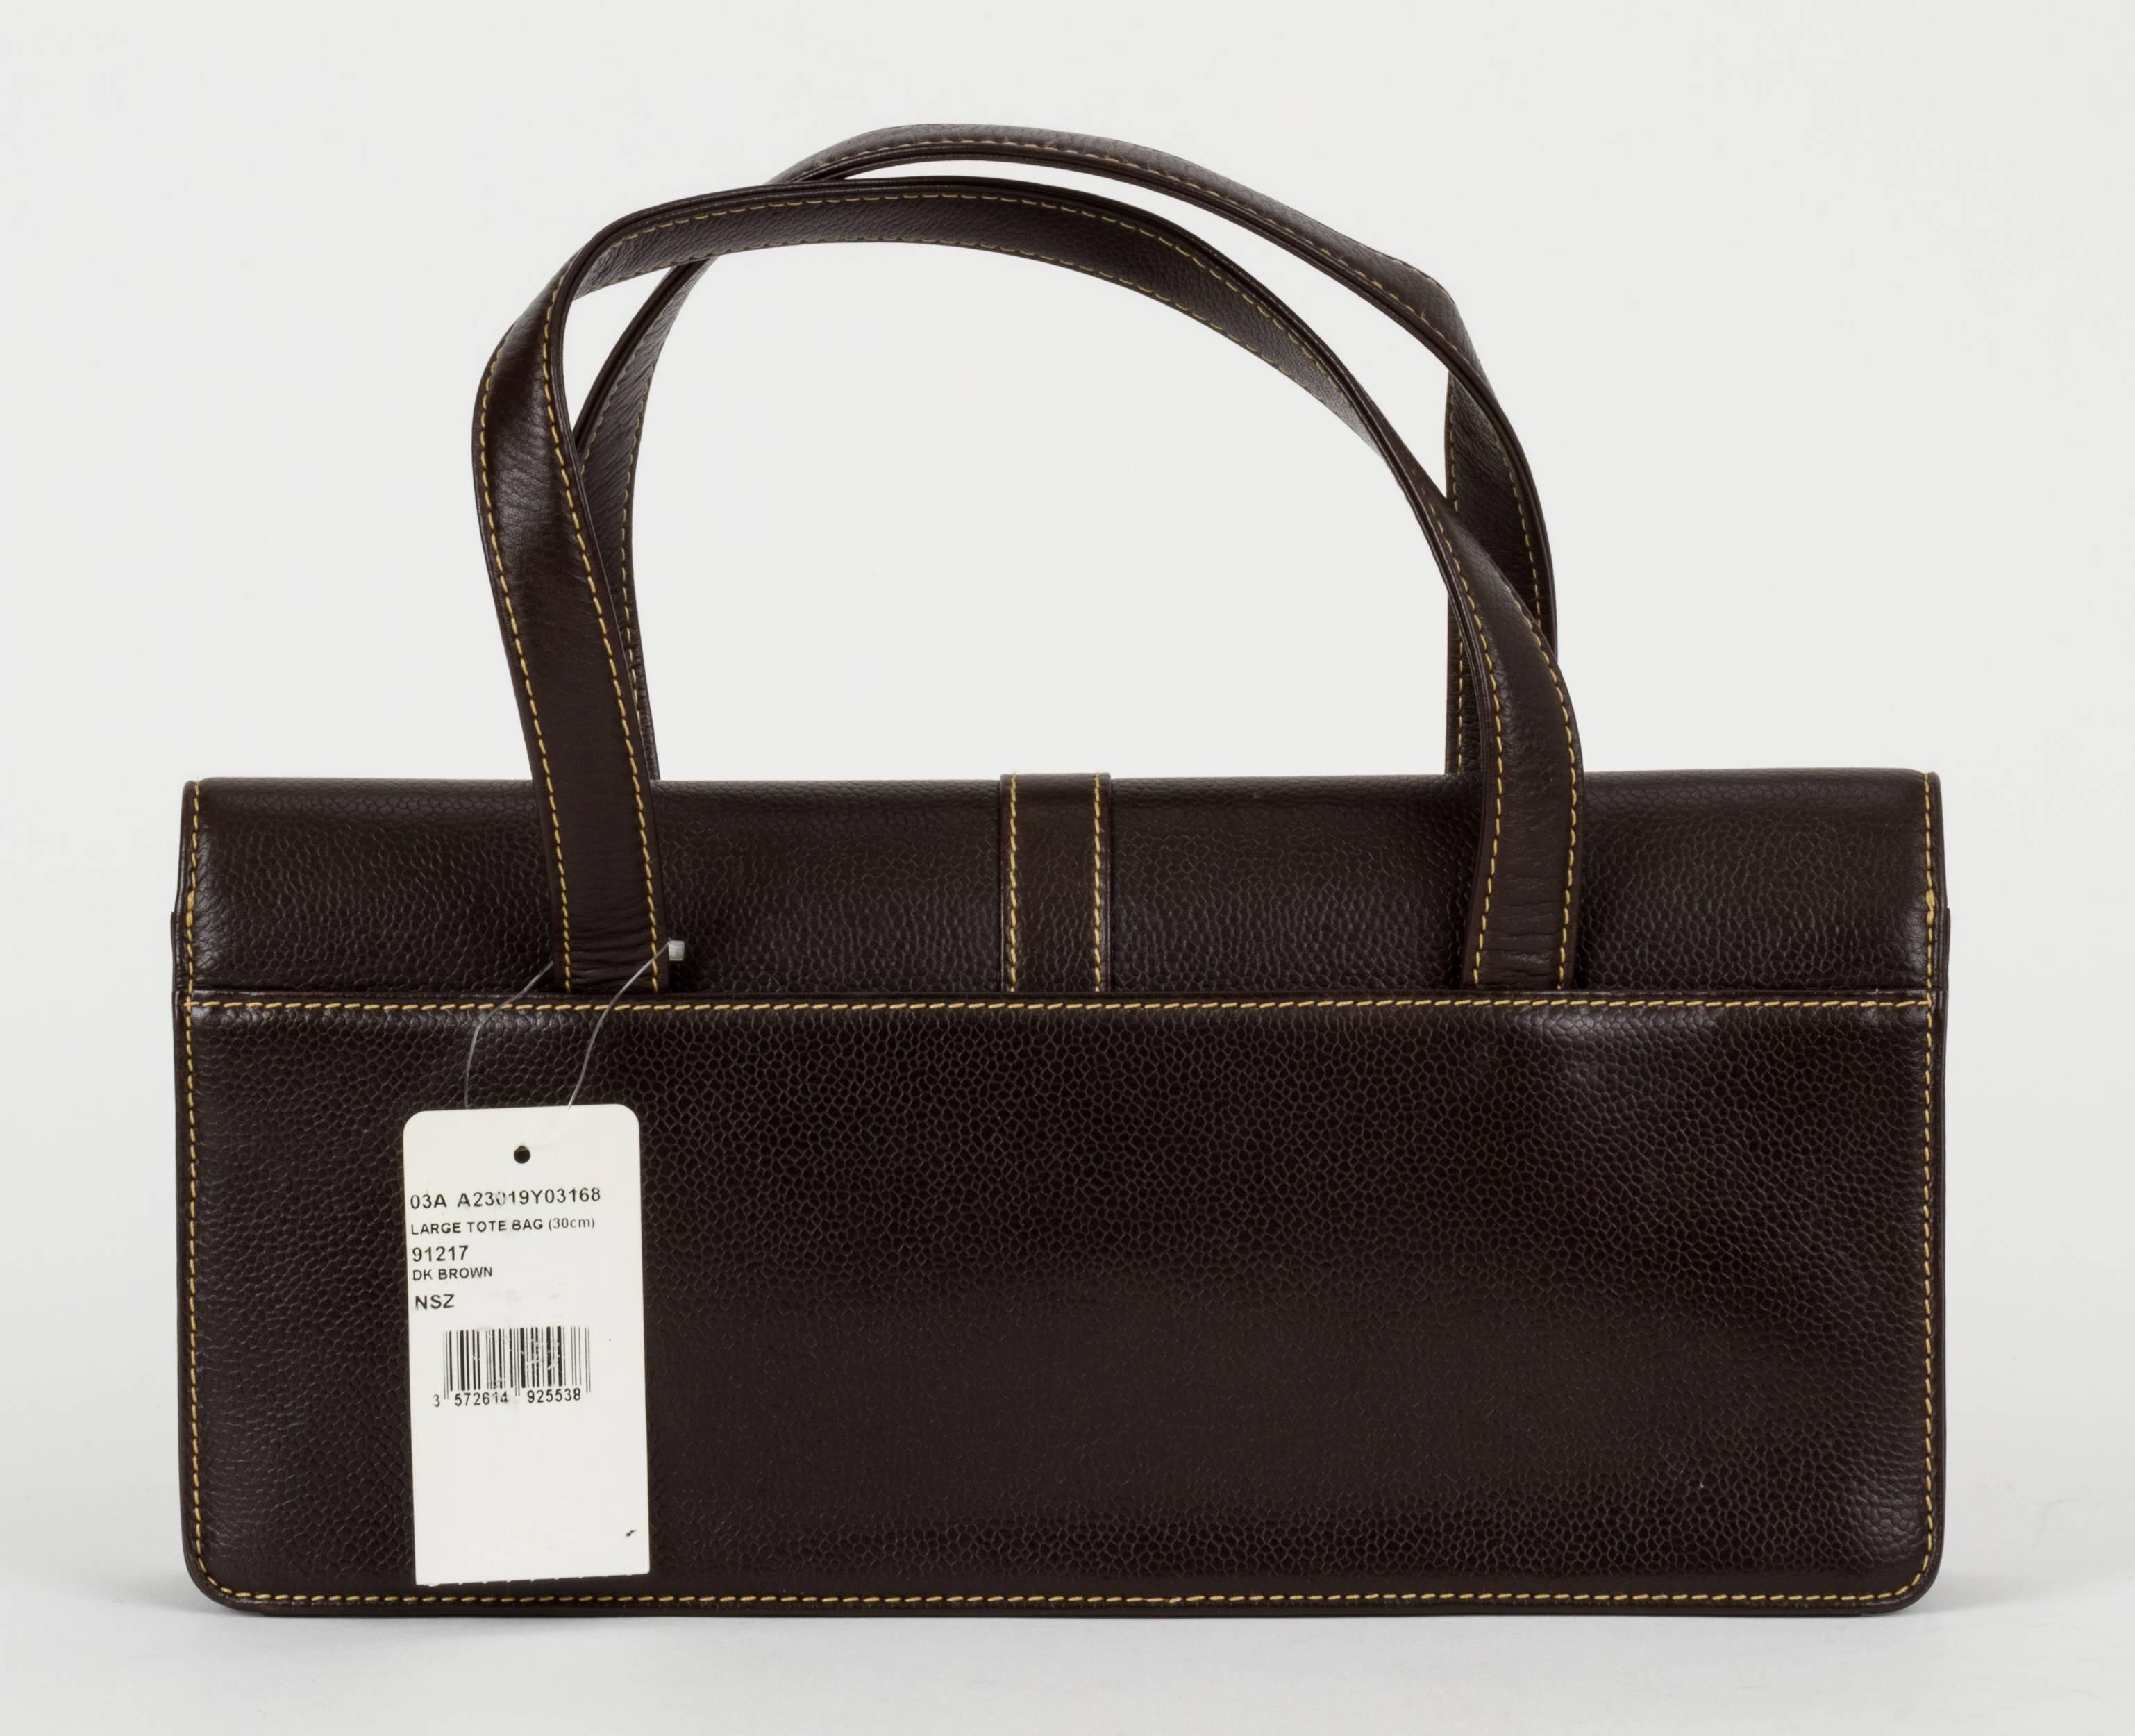 Chanel new-with-tag dark-brown caviar leather handbag. Handle drop, 7